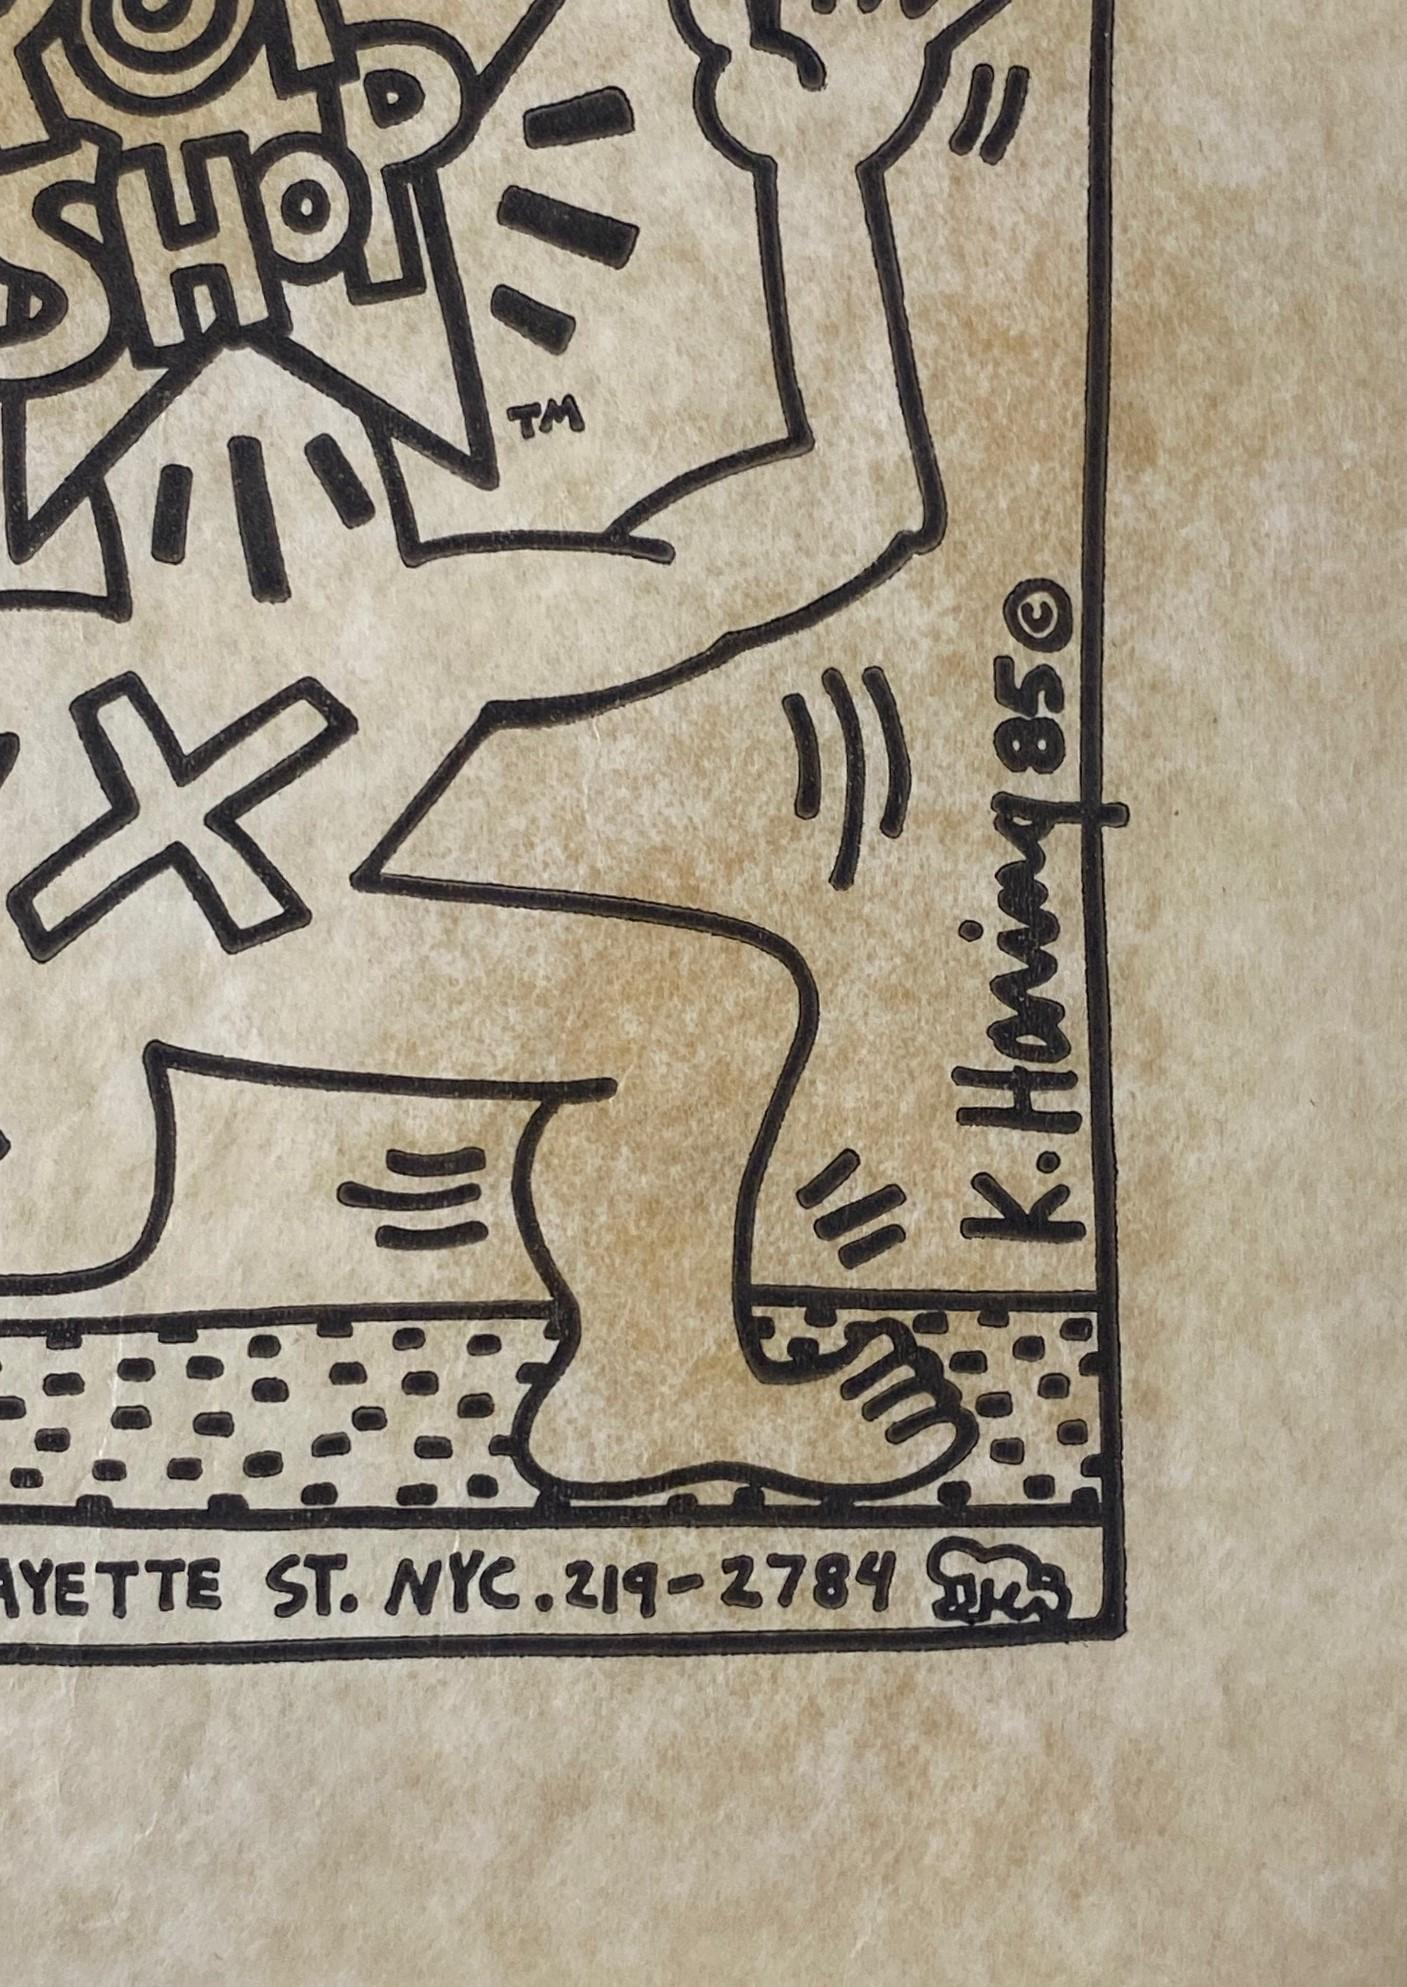 Keith Haring Original New York City Pop Shop Lithograph Bag With Bonus, 1980s For Sale 4